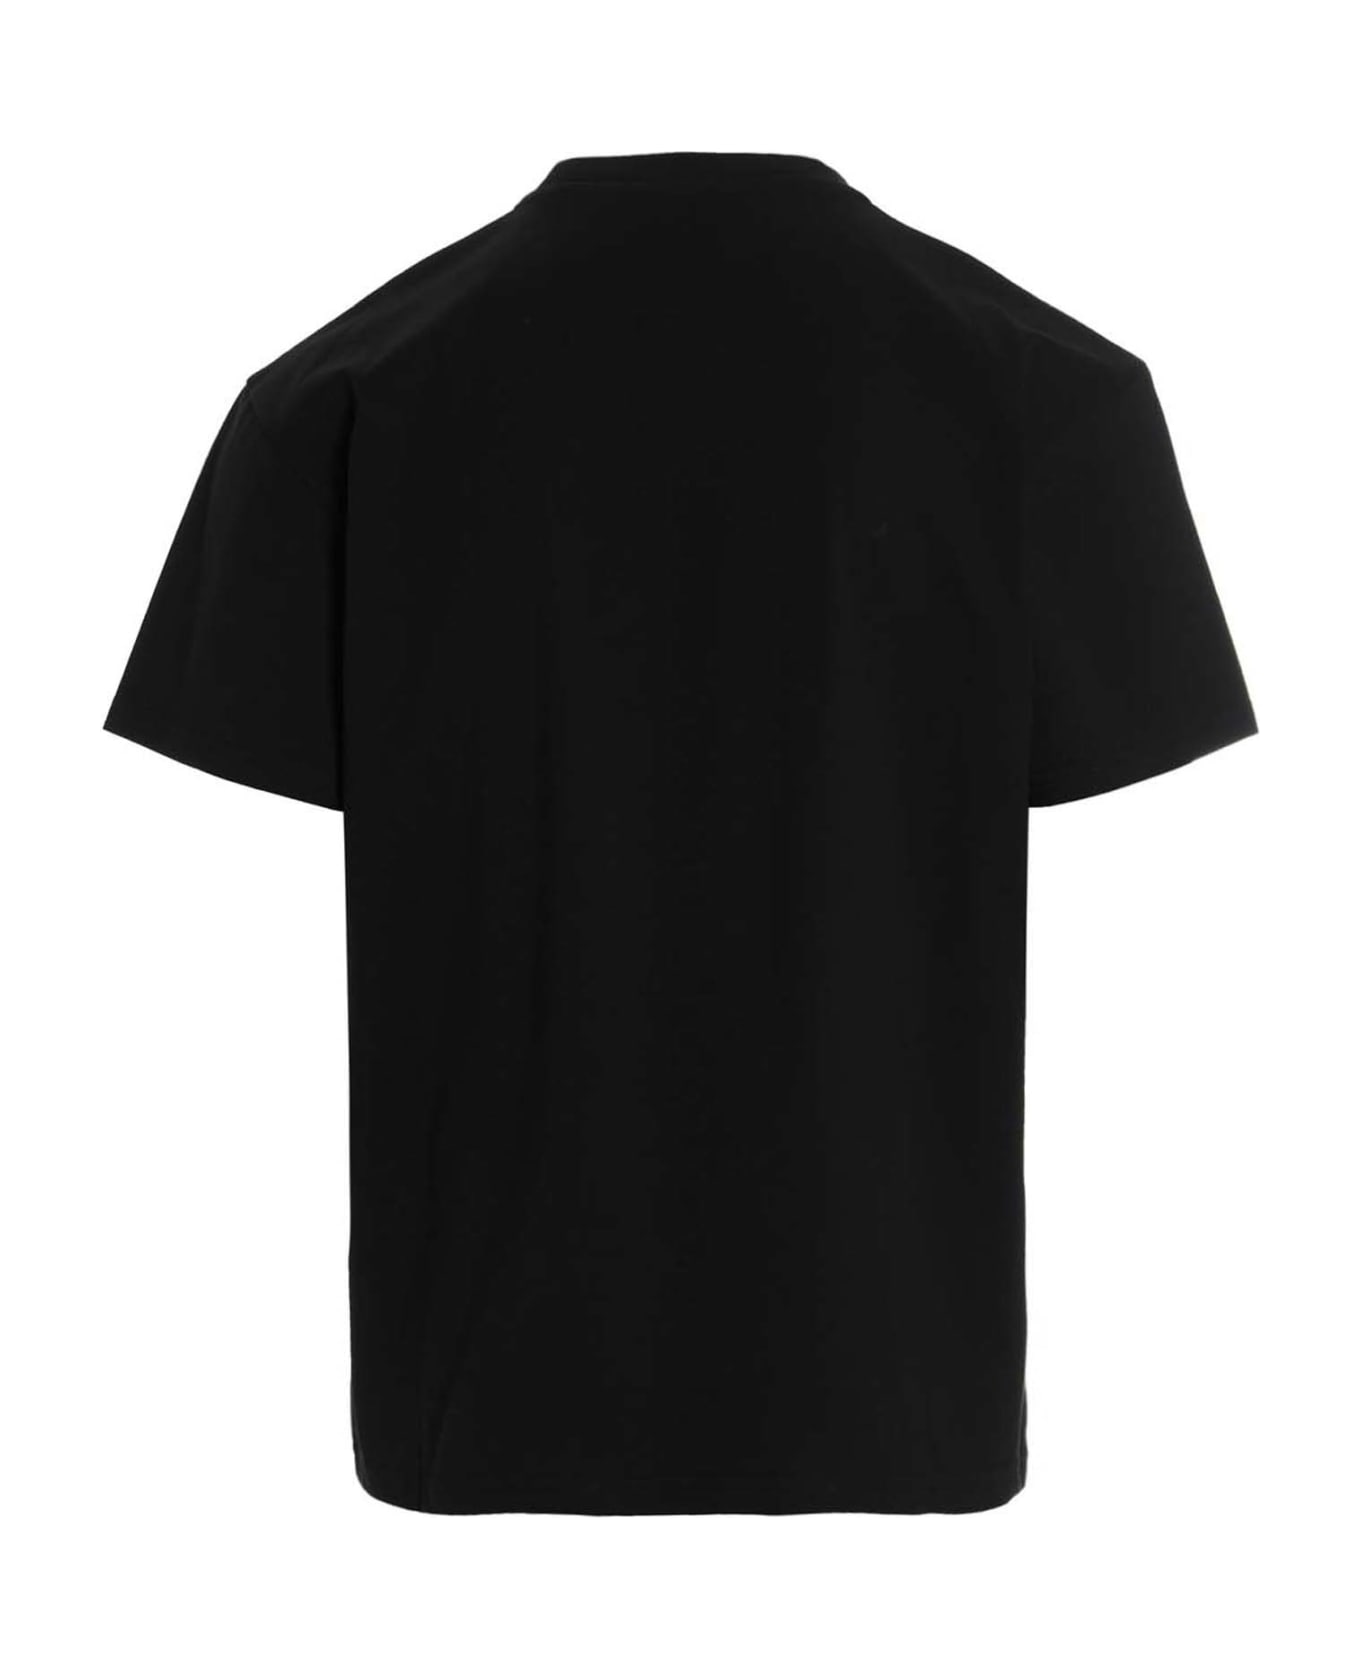 J.W. Anderson 'anchor' T-shirt - Black  